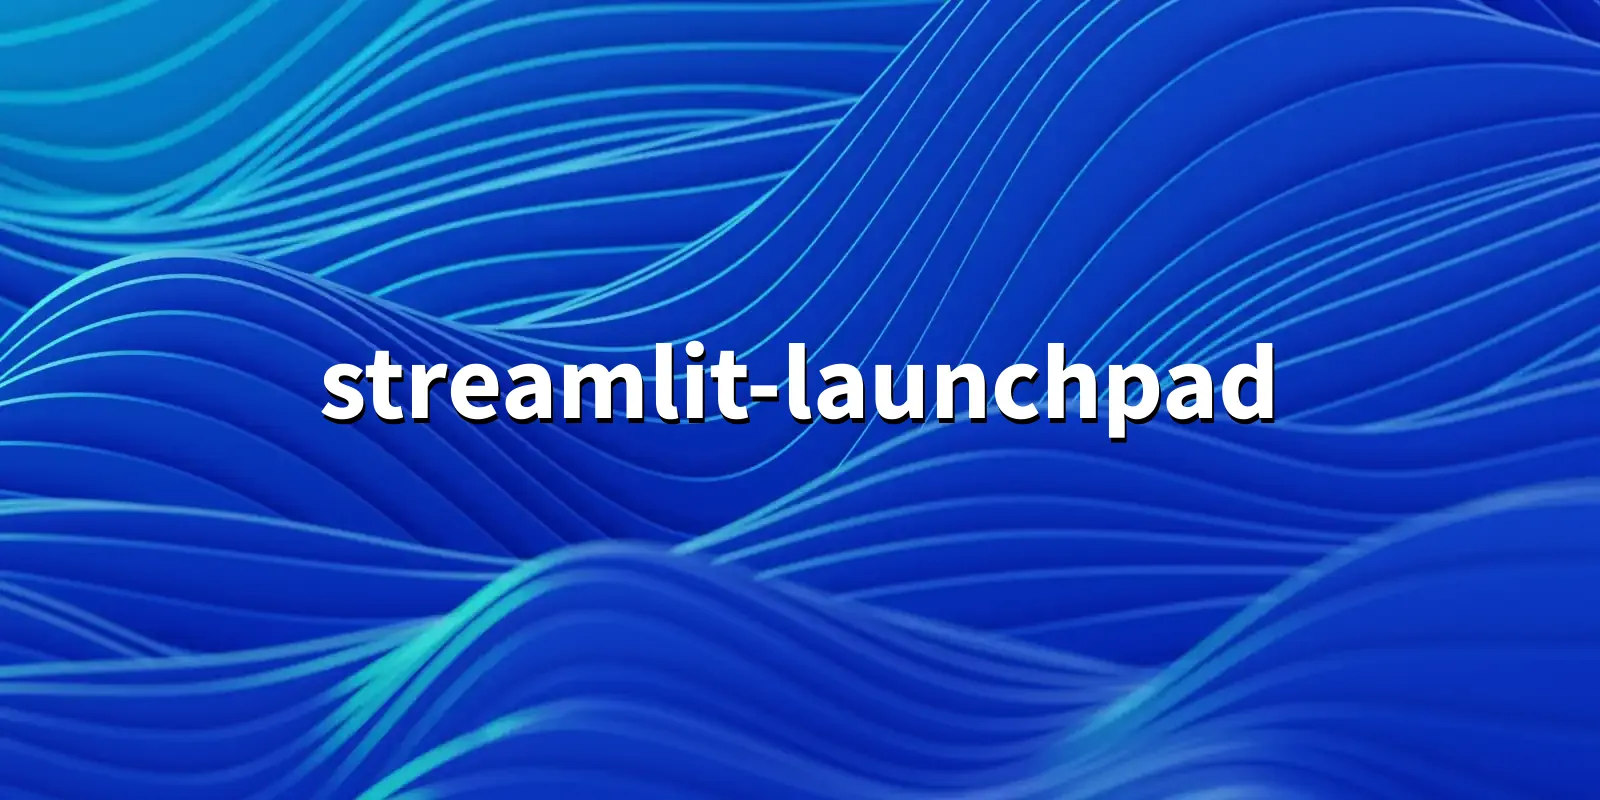 /pkg/s/streamlit-launchpad/streamlit-launchpad-banner.webp